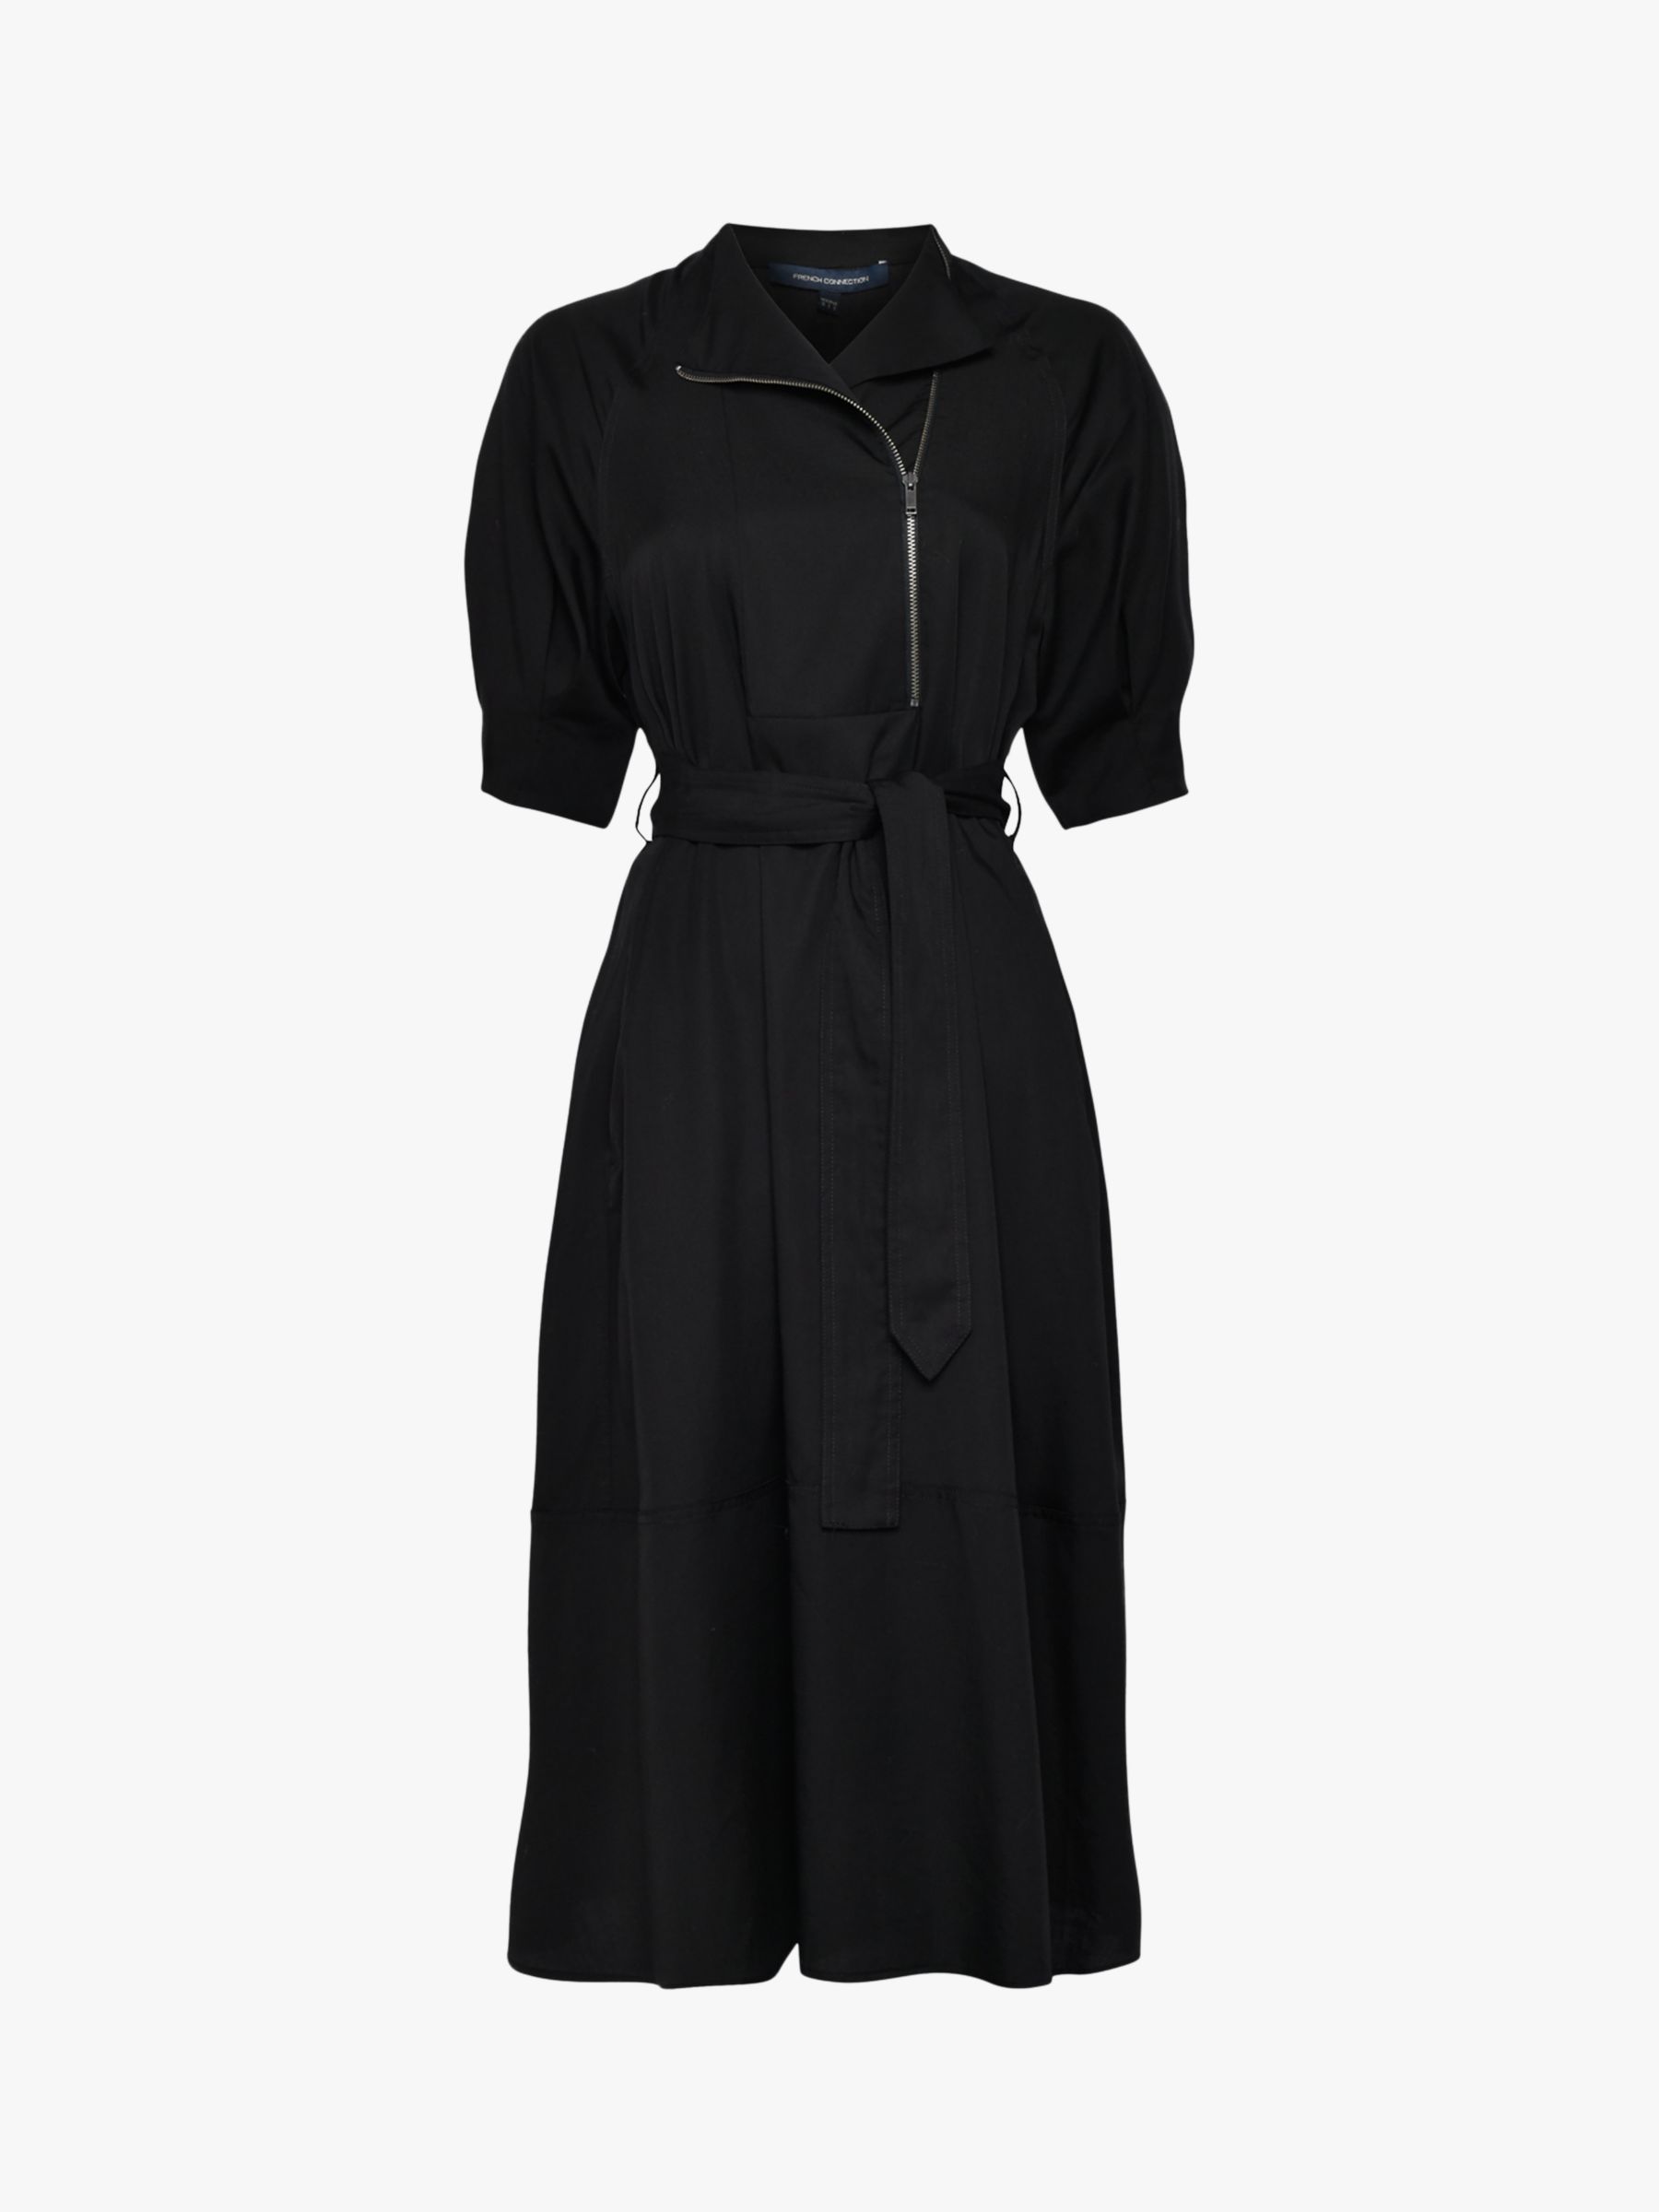 French Connection Clarita Shirt Dress, Black, 6